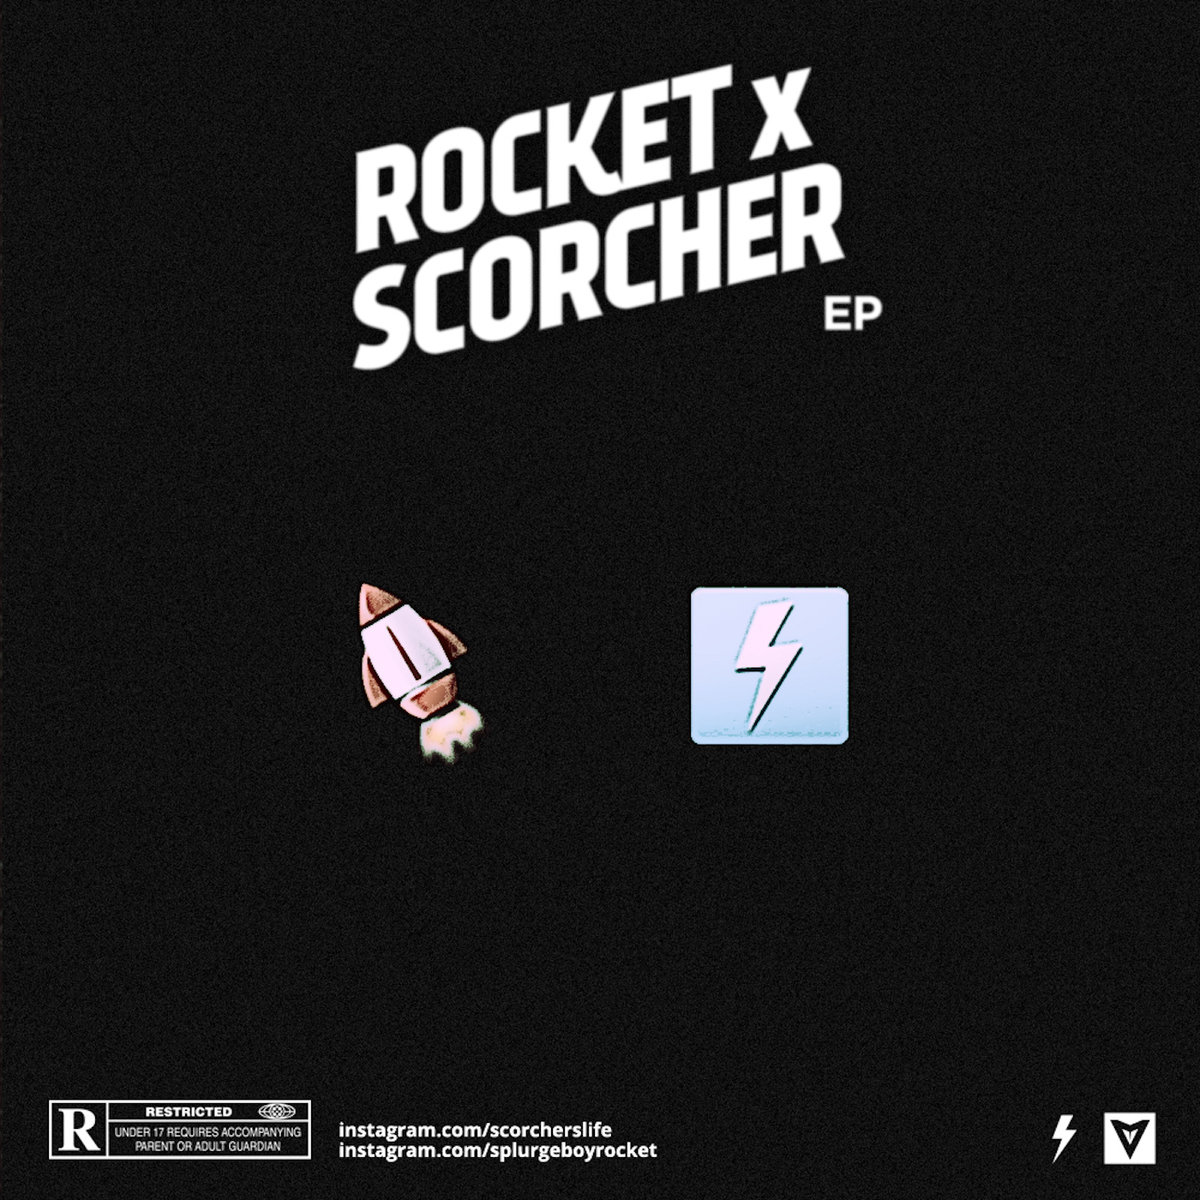 Rocket x Scorcher 19.07.2016ANDREW